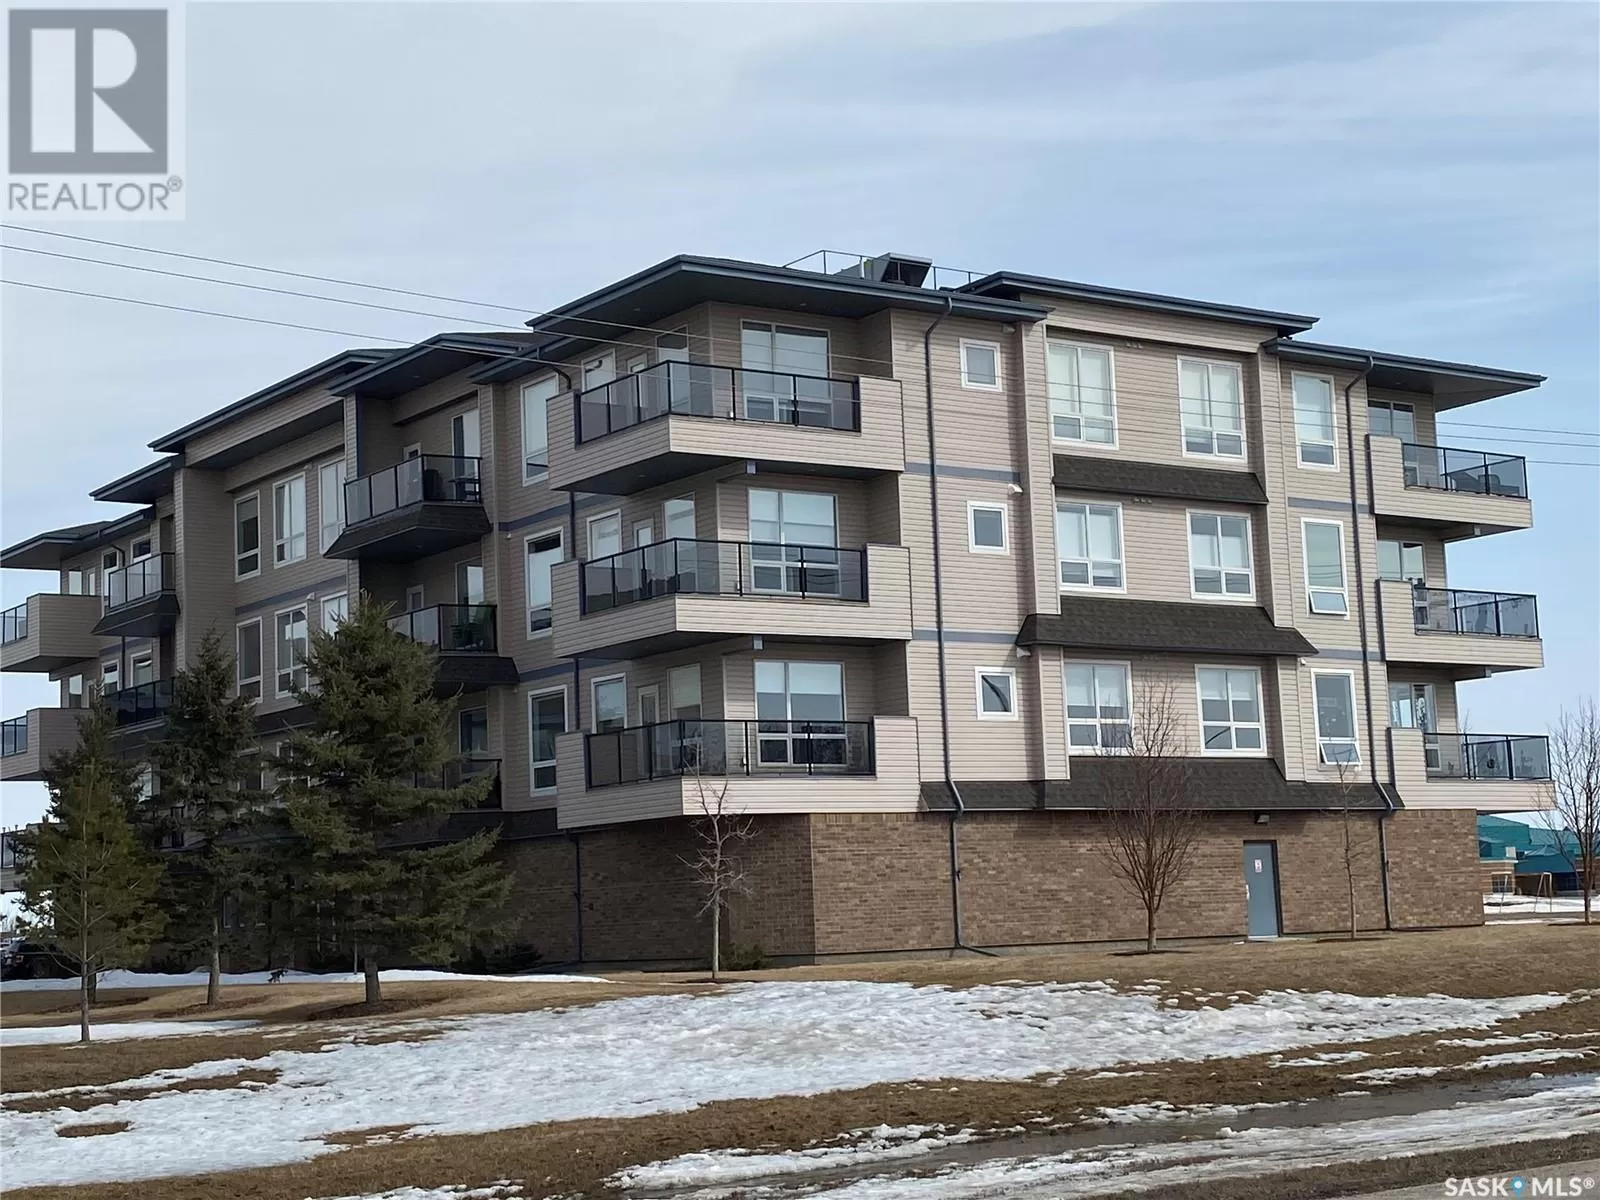 Apartment for rent: 207 339 Morrison Drive, Yorkton, Saskatchewan S3N 3R7